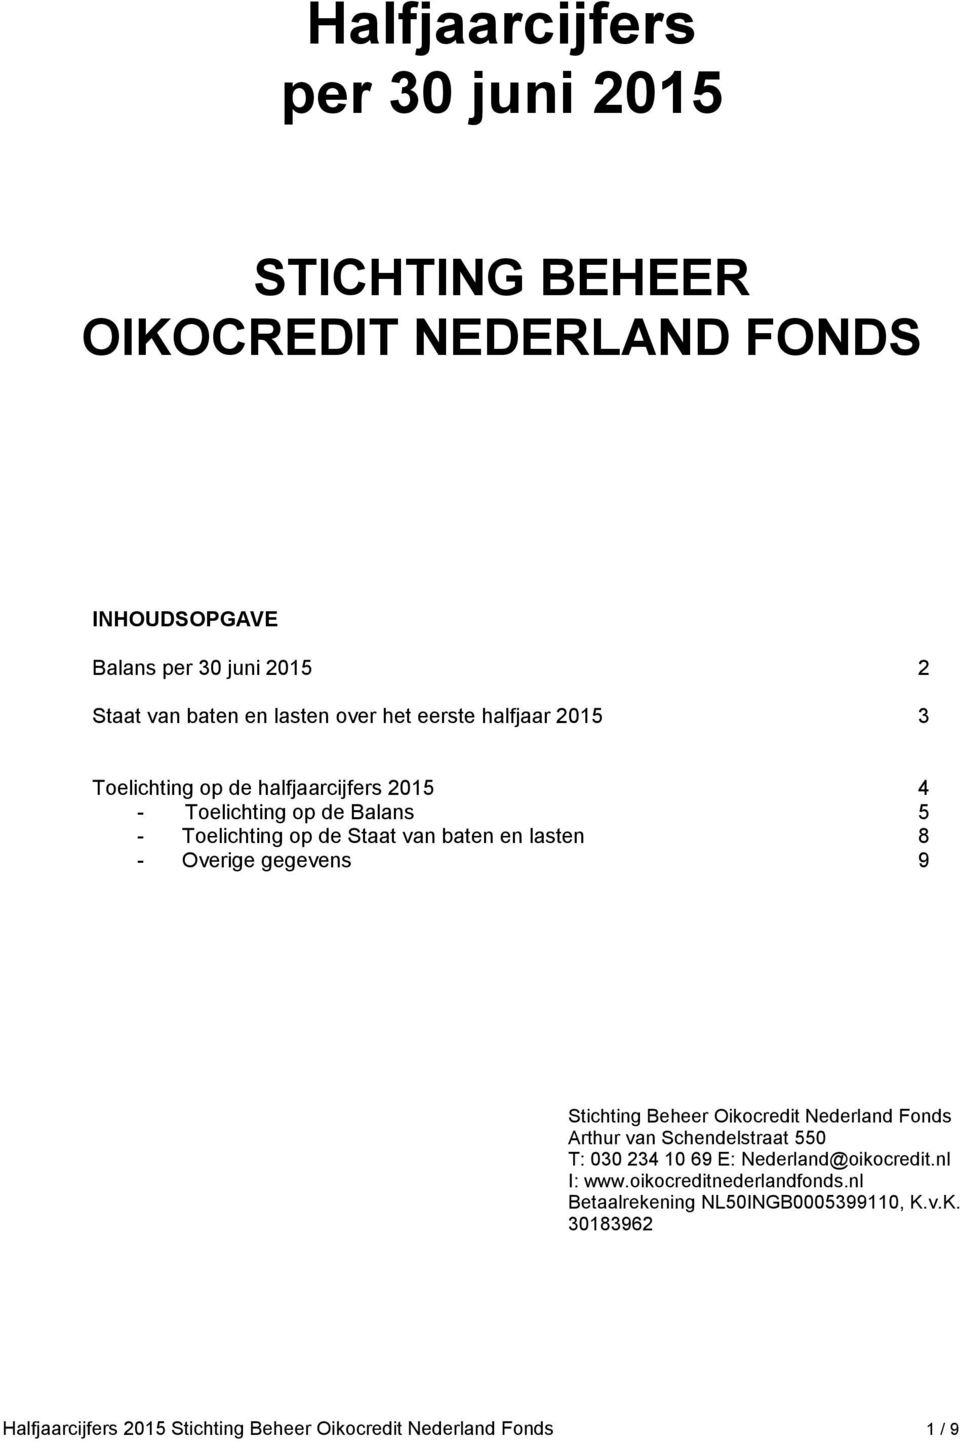 lasten 8 - Overige gegevens 9 Stichting Beheer Oikocredit Nederland Fonds Arthur van Schendelstraat 550 T: 030 234 10 69 E: Nederland@oikocredit.